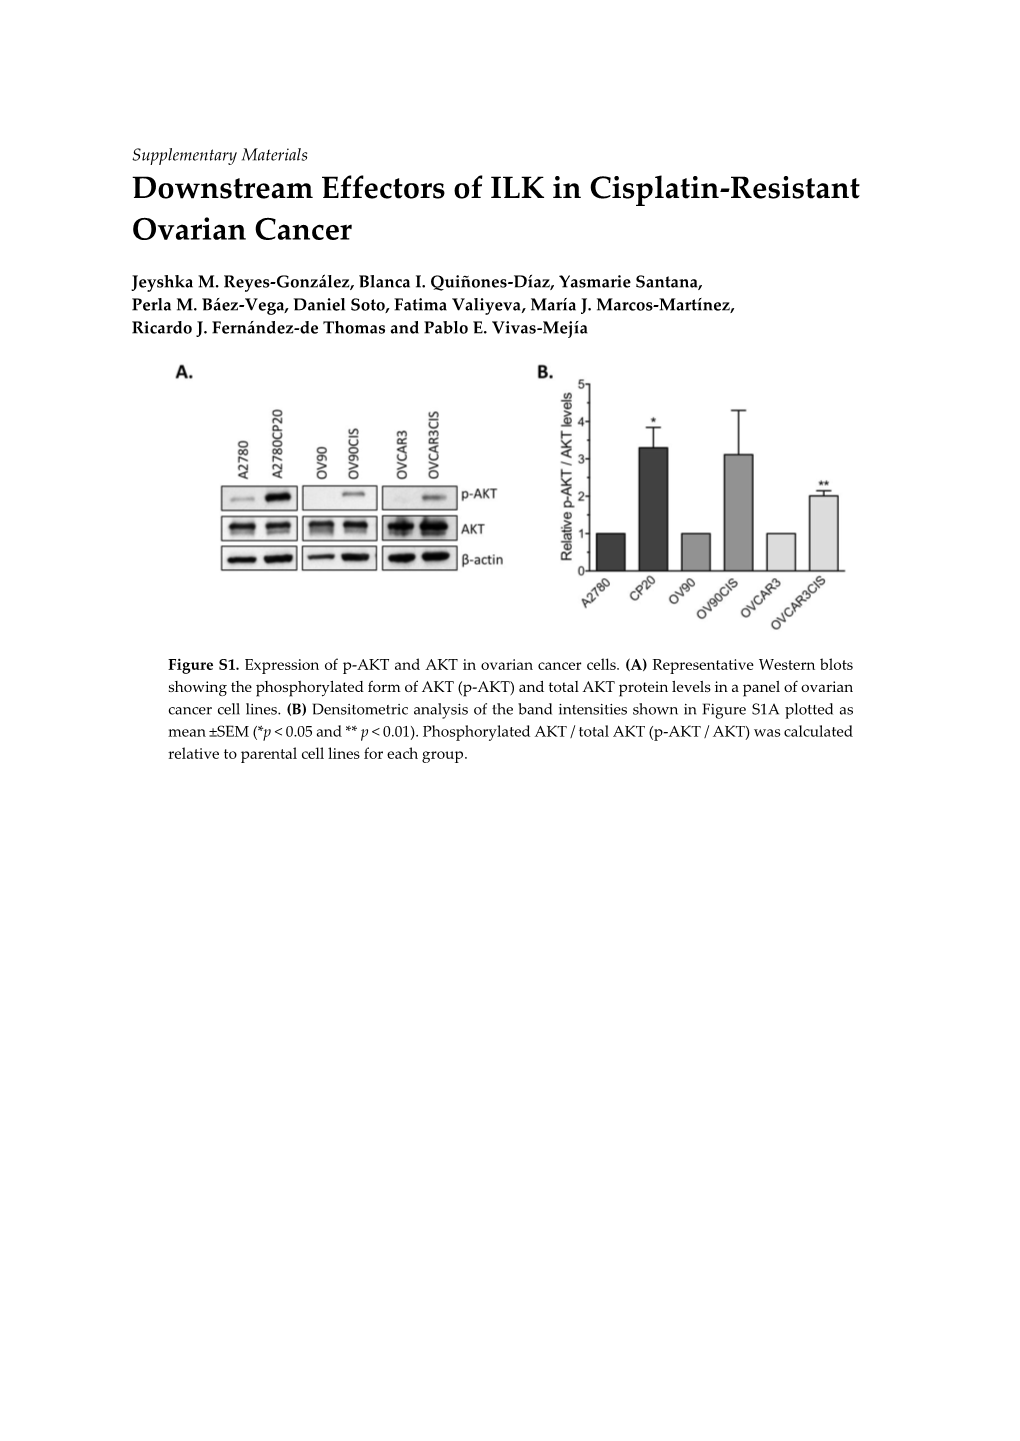 Downstream Effectors of ILK in Cisplatin-Resistant Ovarian Cancer